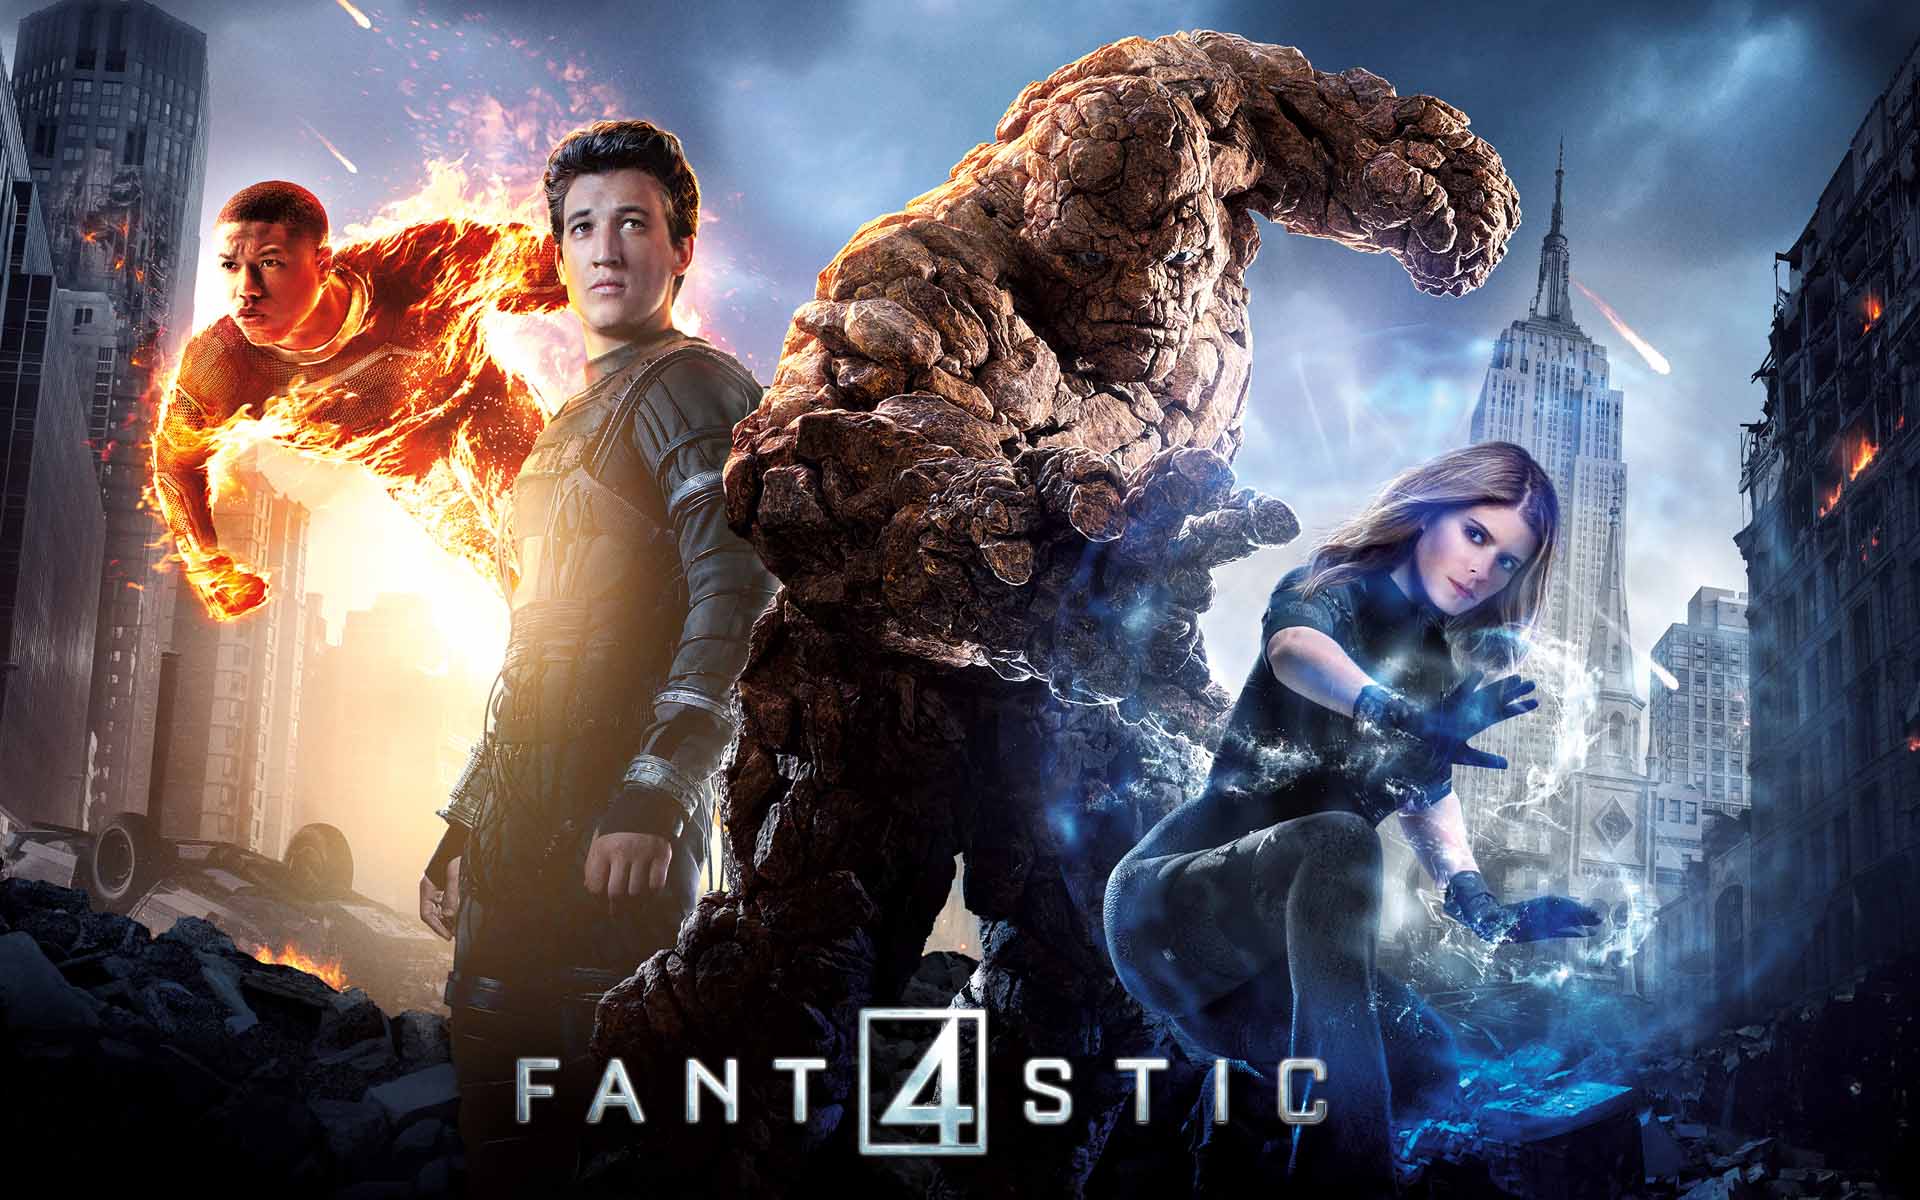 Fantastic Four HD Movie Poster Wallpaper